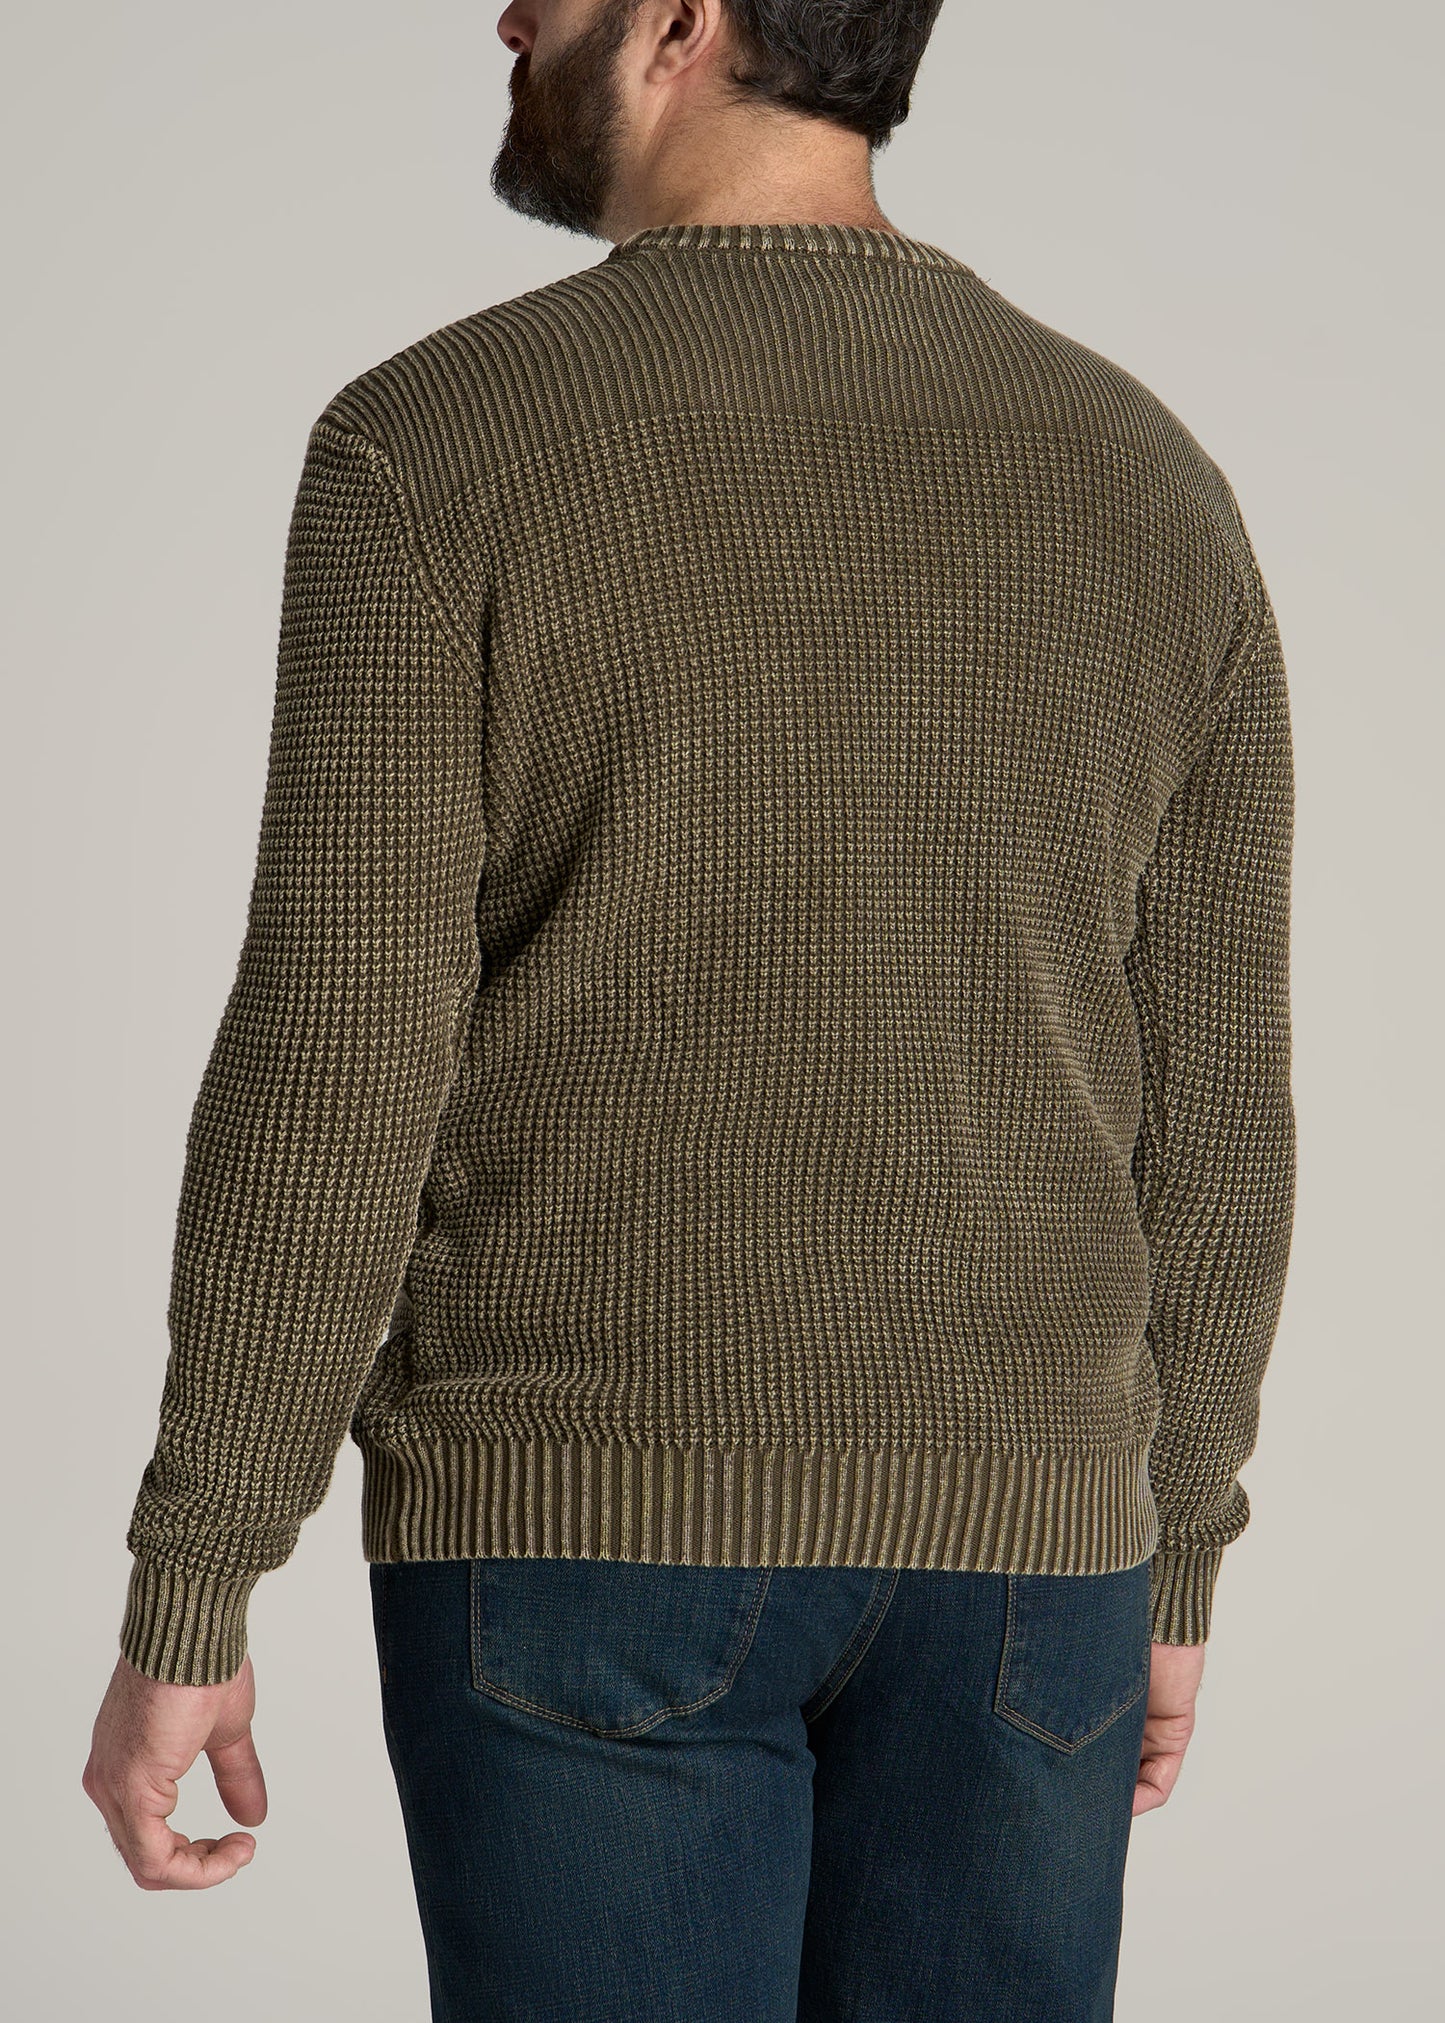 LJ&S Acid Wash Knit Tall Men's Sweater in Vintage Surplus Green